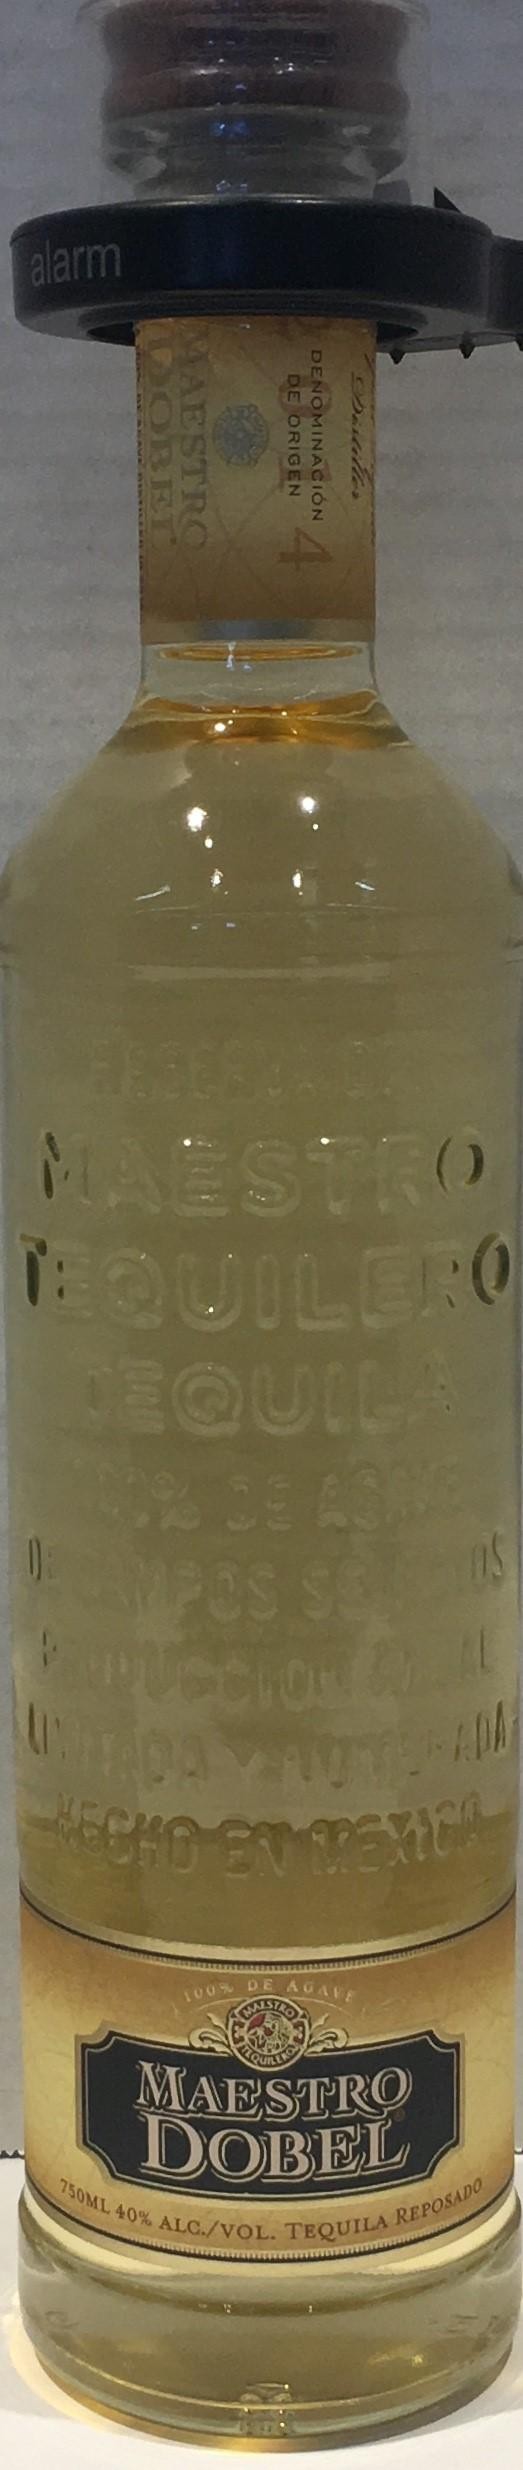 Maestro Dobel Reposado Tequila - 750ml Bottle